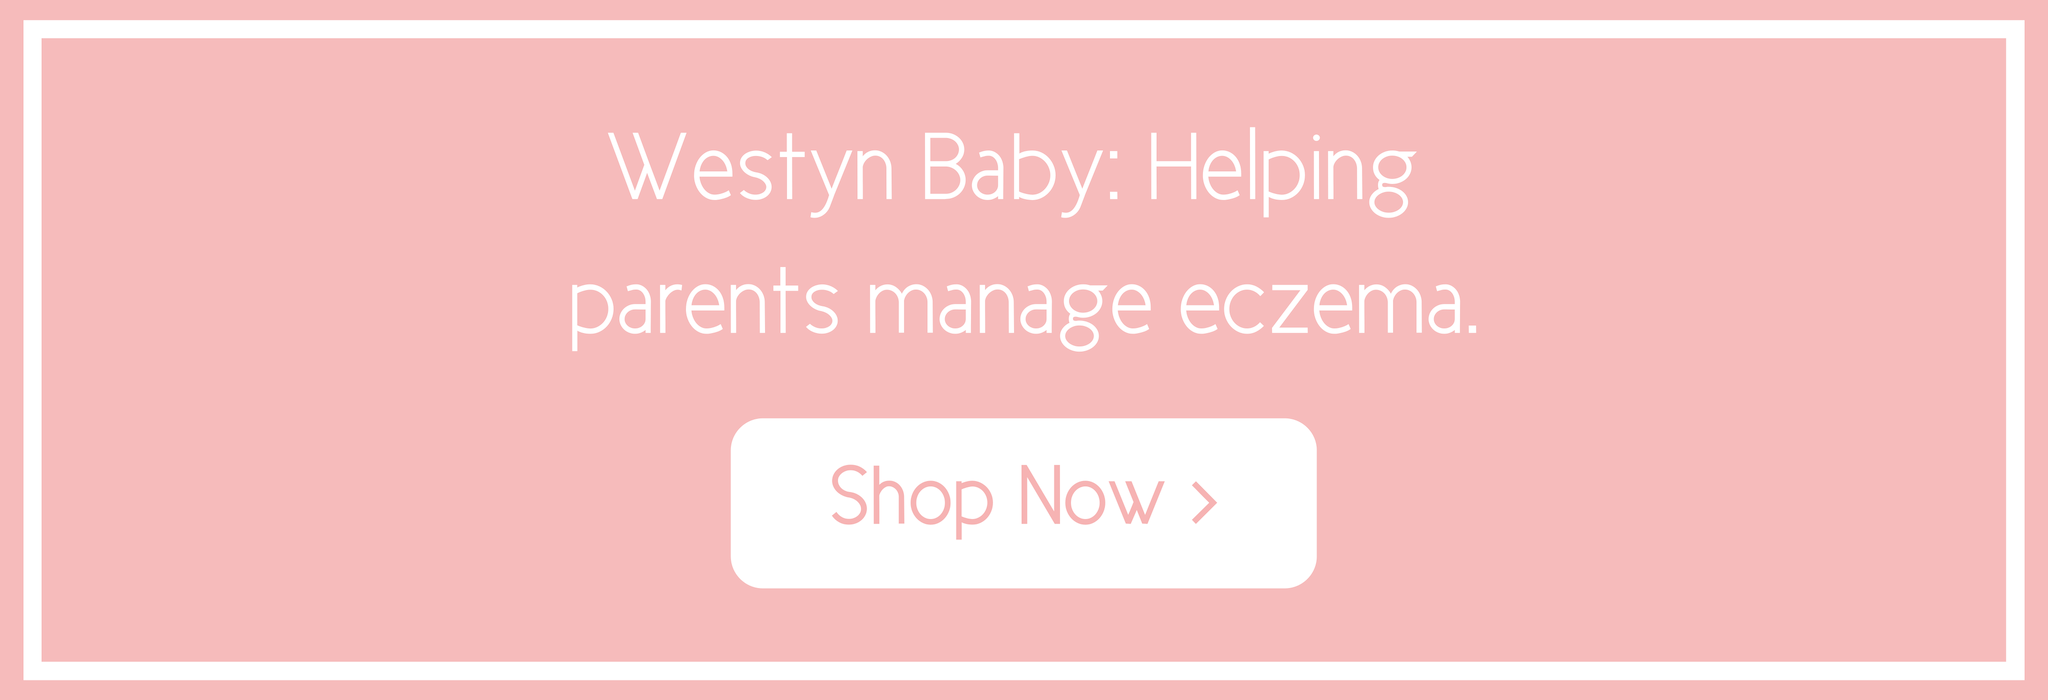 westyn-baby-helping-parents-manage-eczema